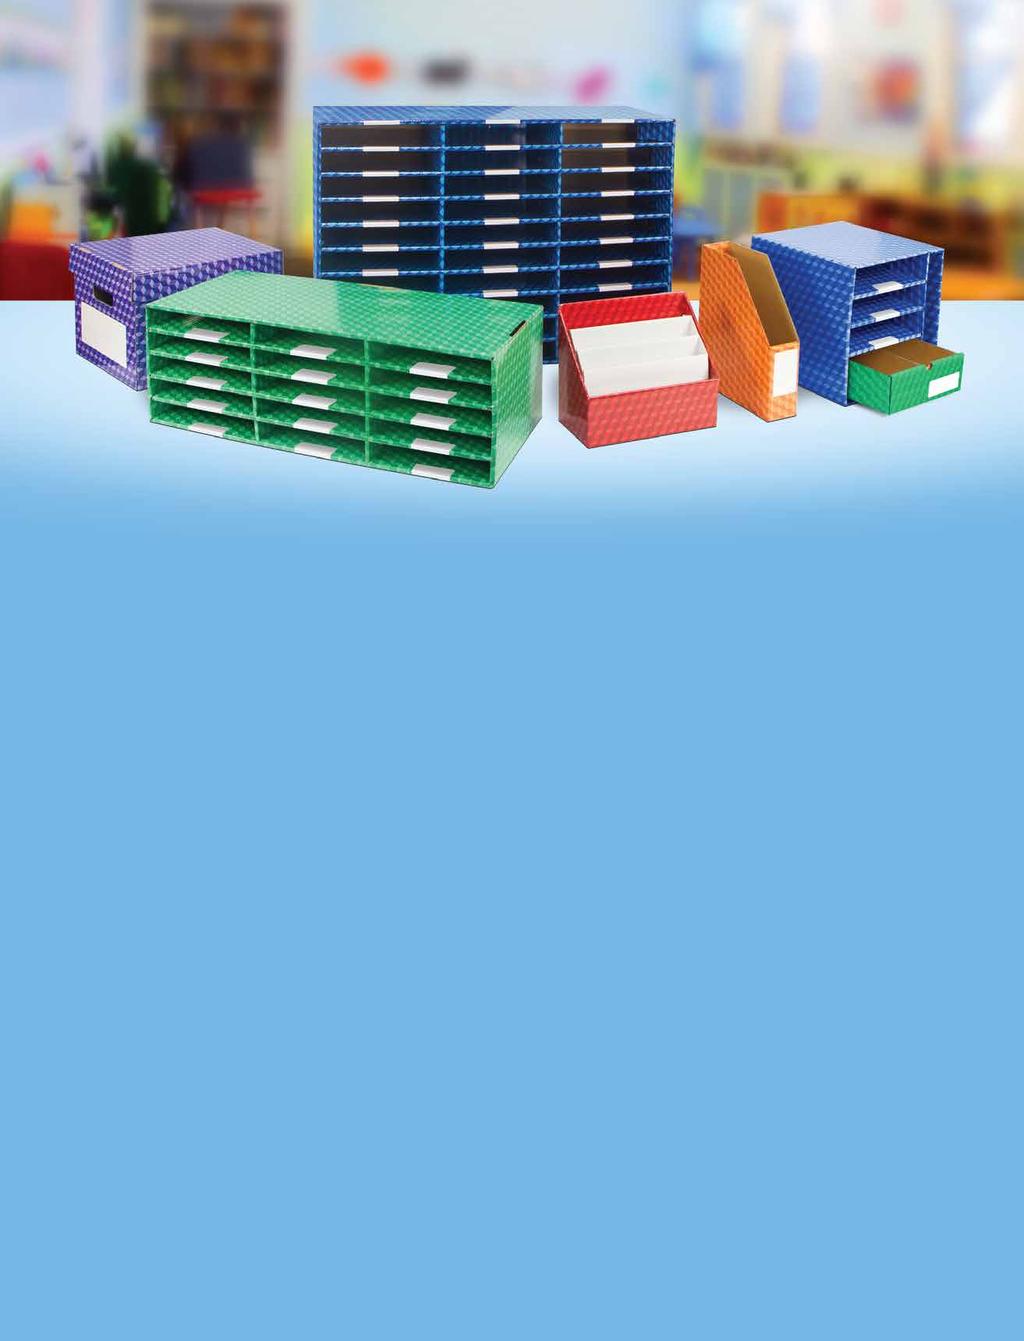 Corrugated Classroom Storage PLASTIC COATING FOR DURABILITY